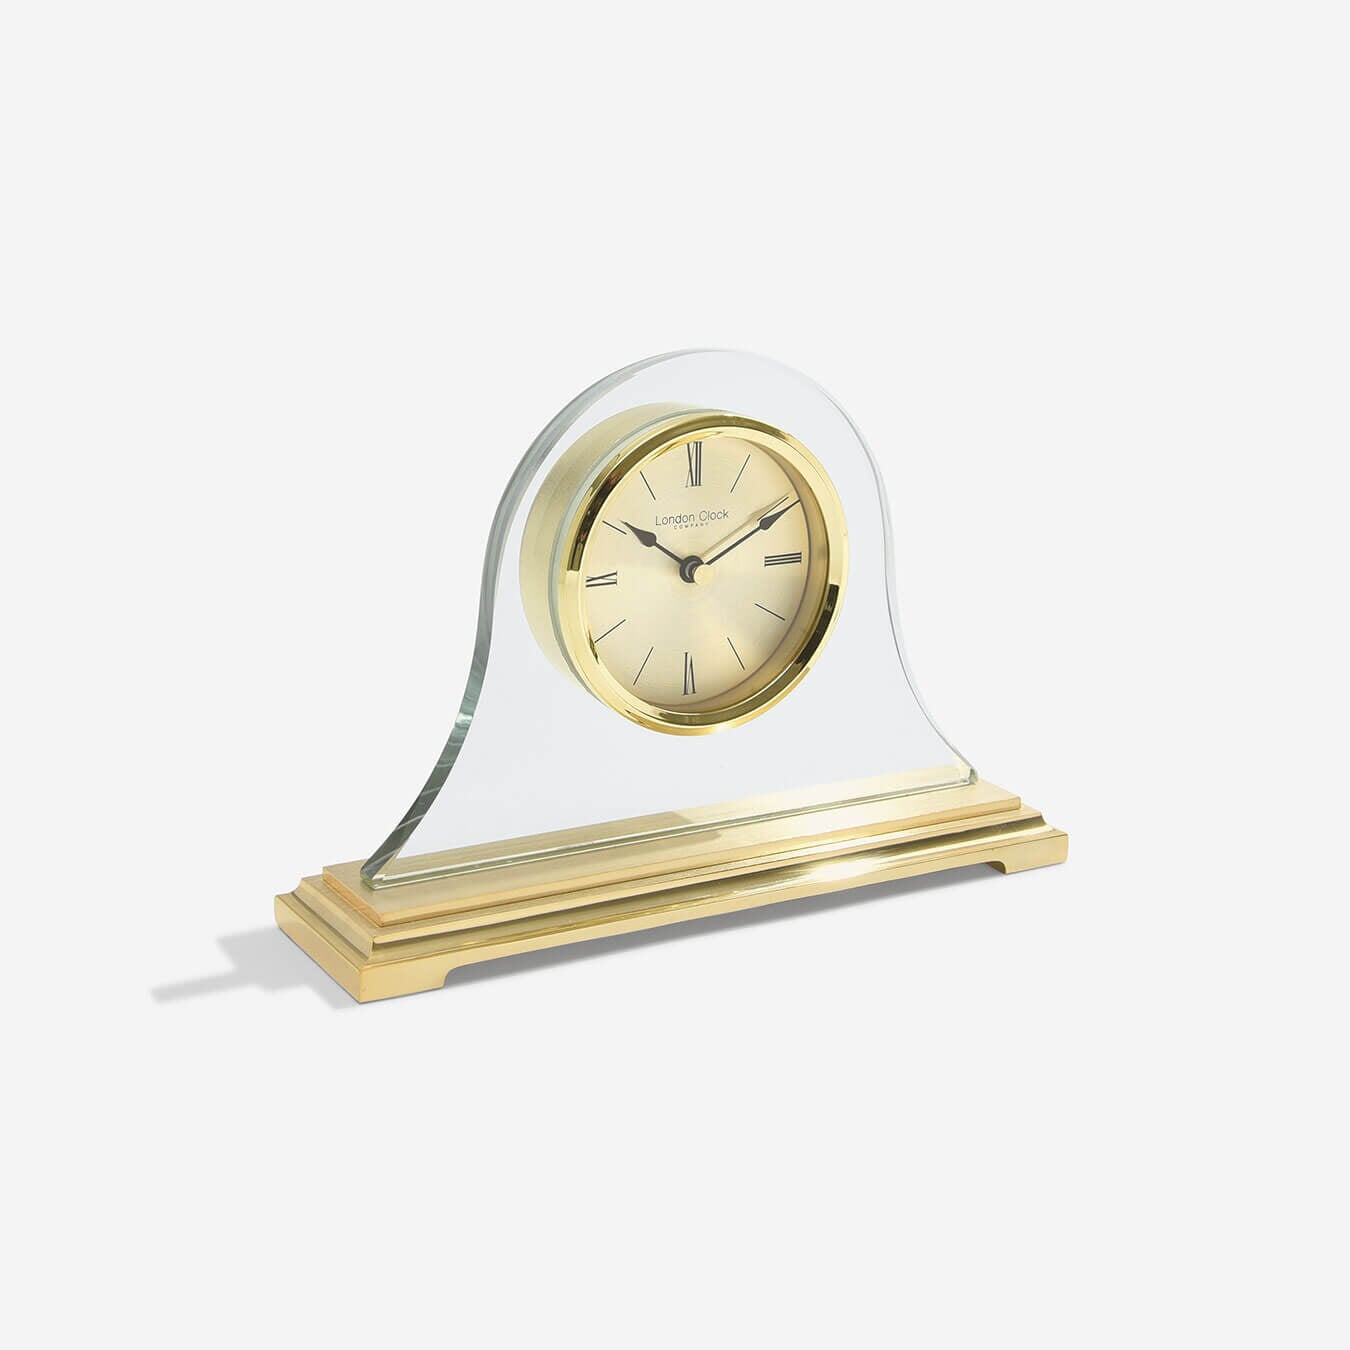 London Clock Company. Napoleon Mantel Clock Gold *STOCK DUE LATE FEB* - timeframedclocks